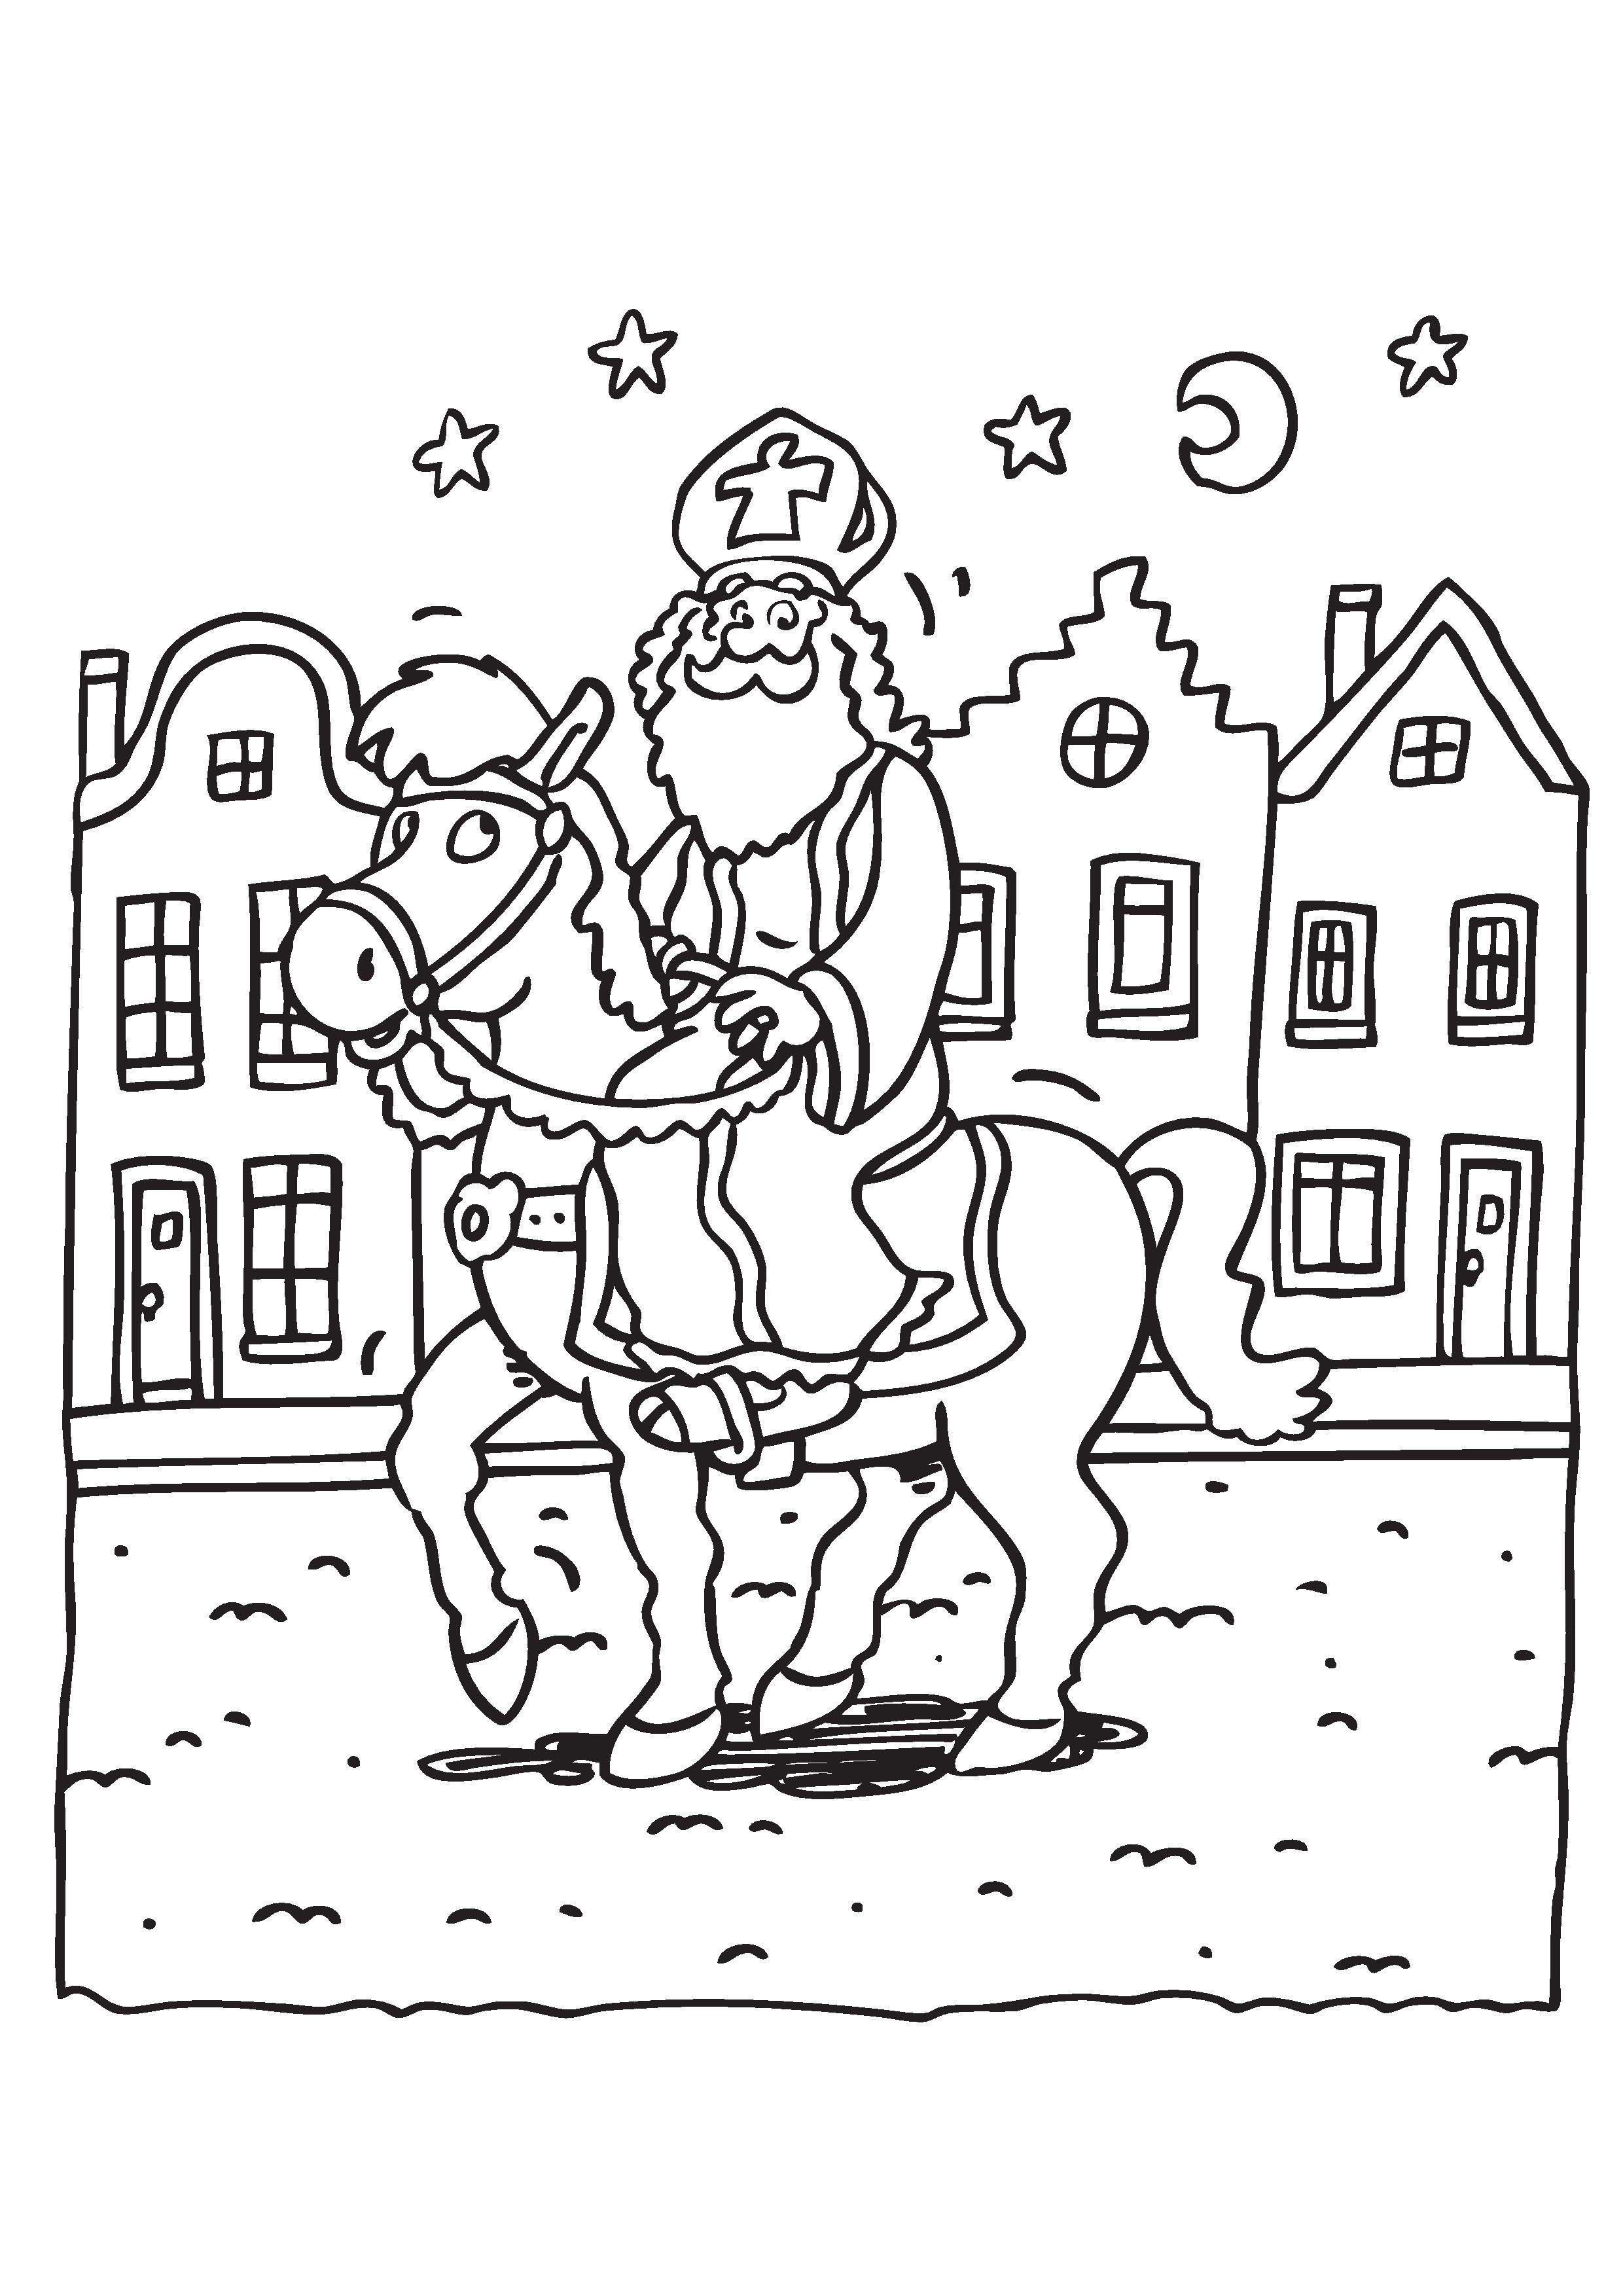 Kleurplaat Sinterklaas paard 2023 voor peuters en